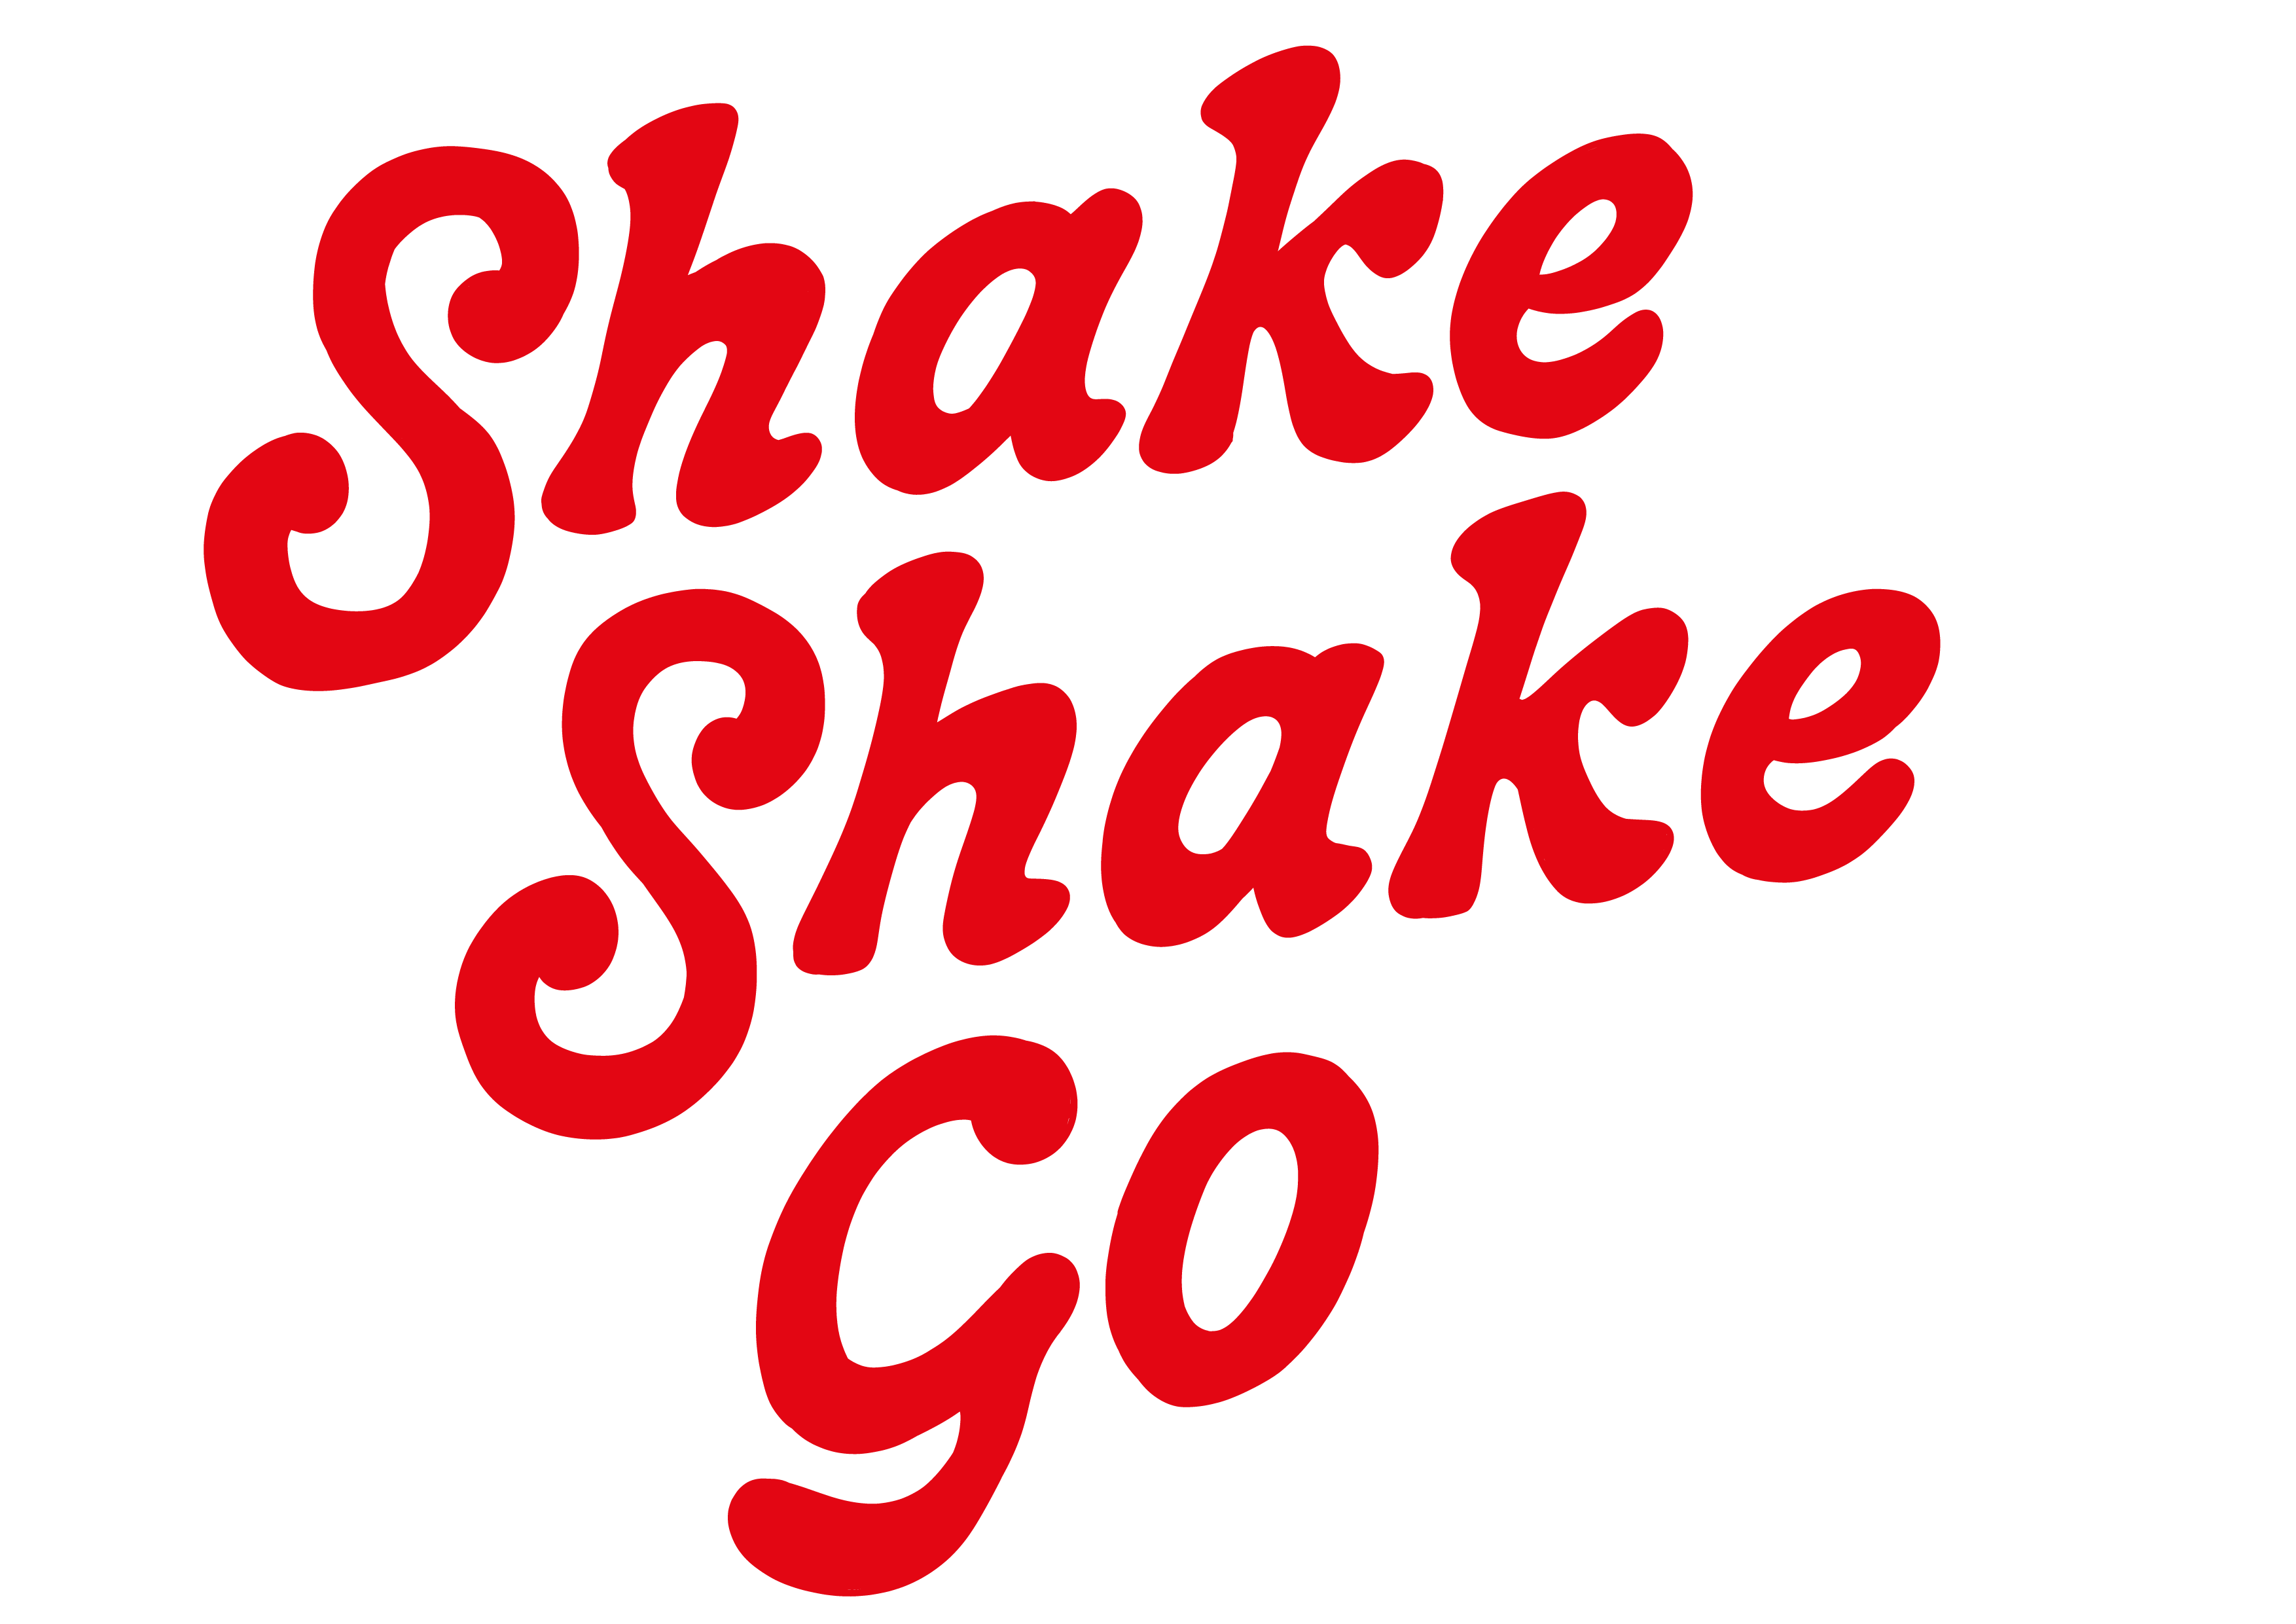 meeting hand shake logo Template | PosterMyWall